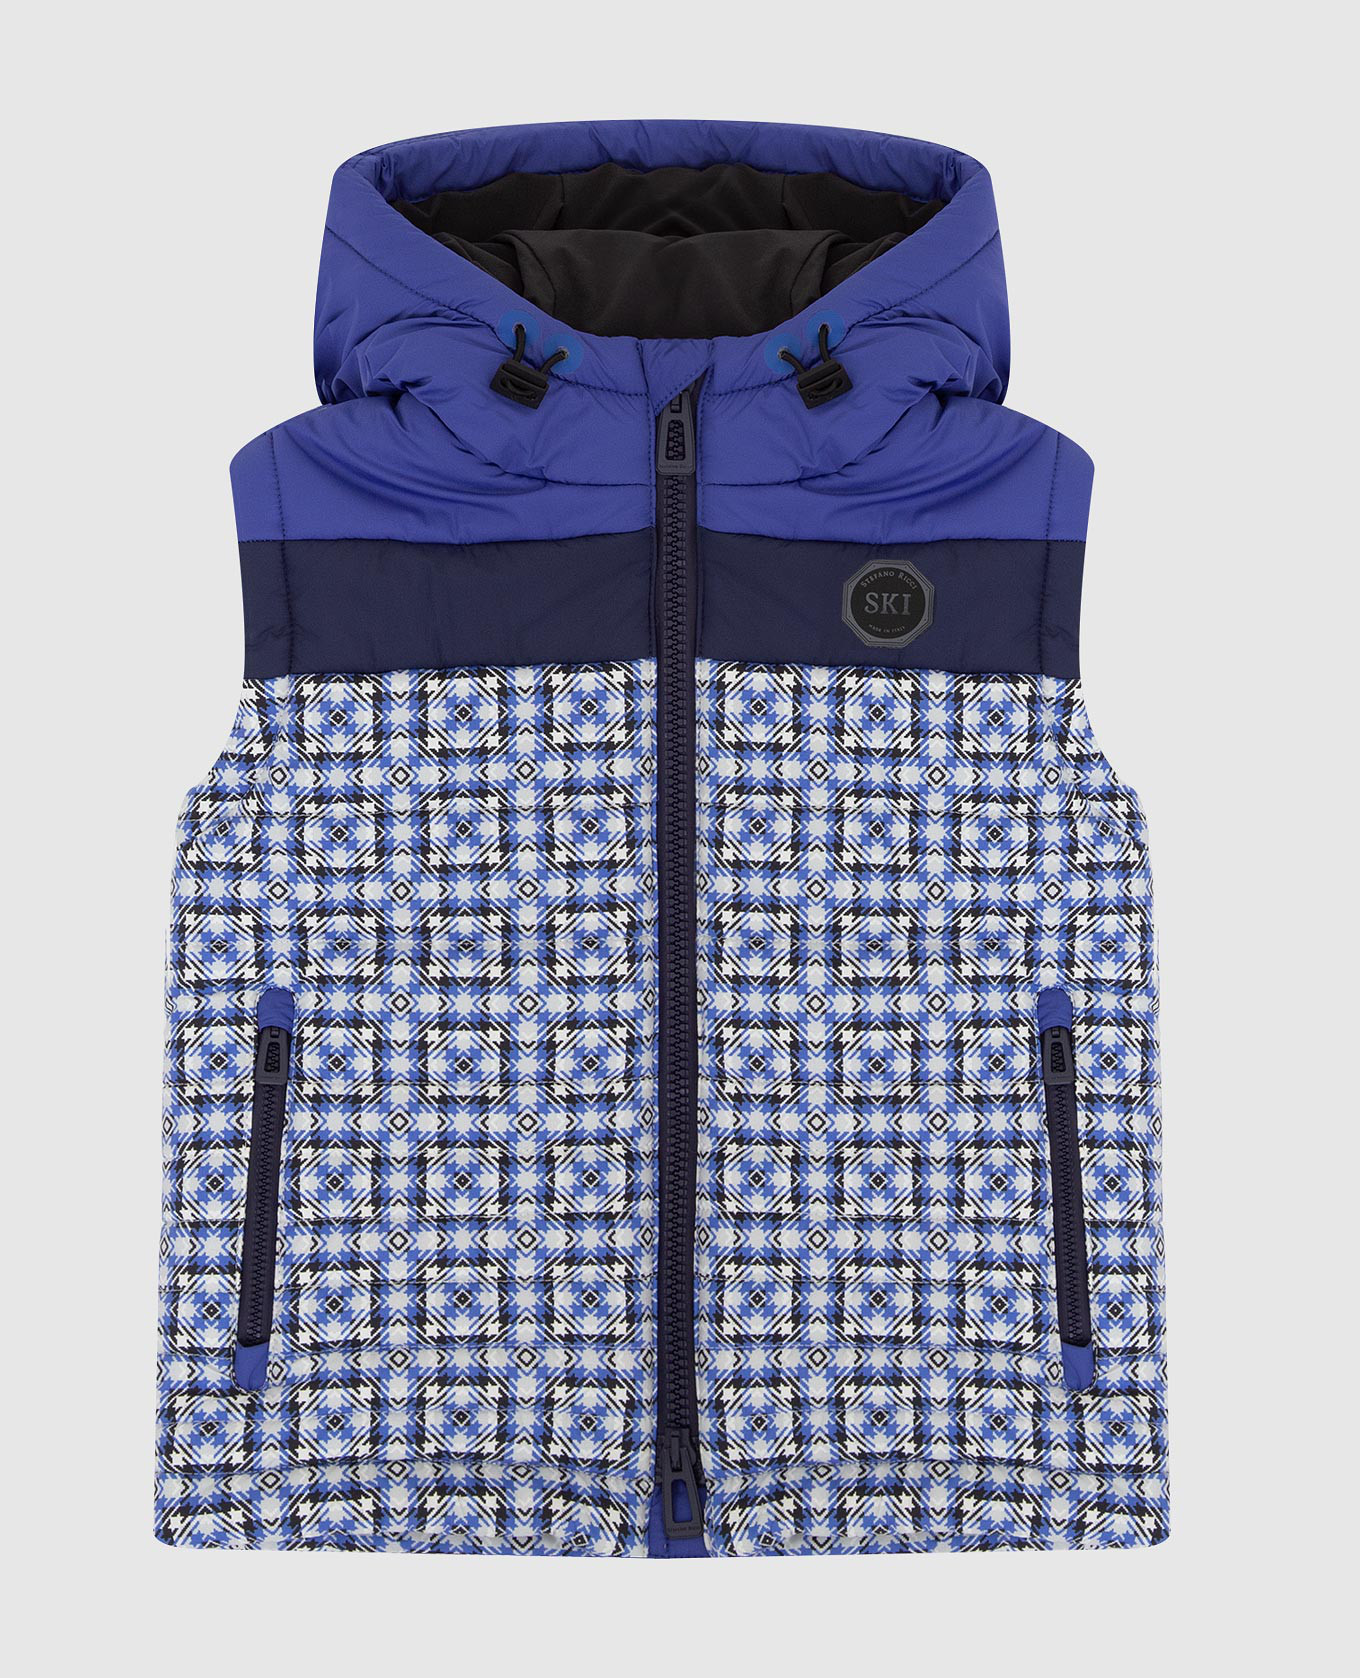 Children's blue vest in a pattern